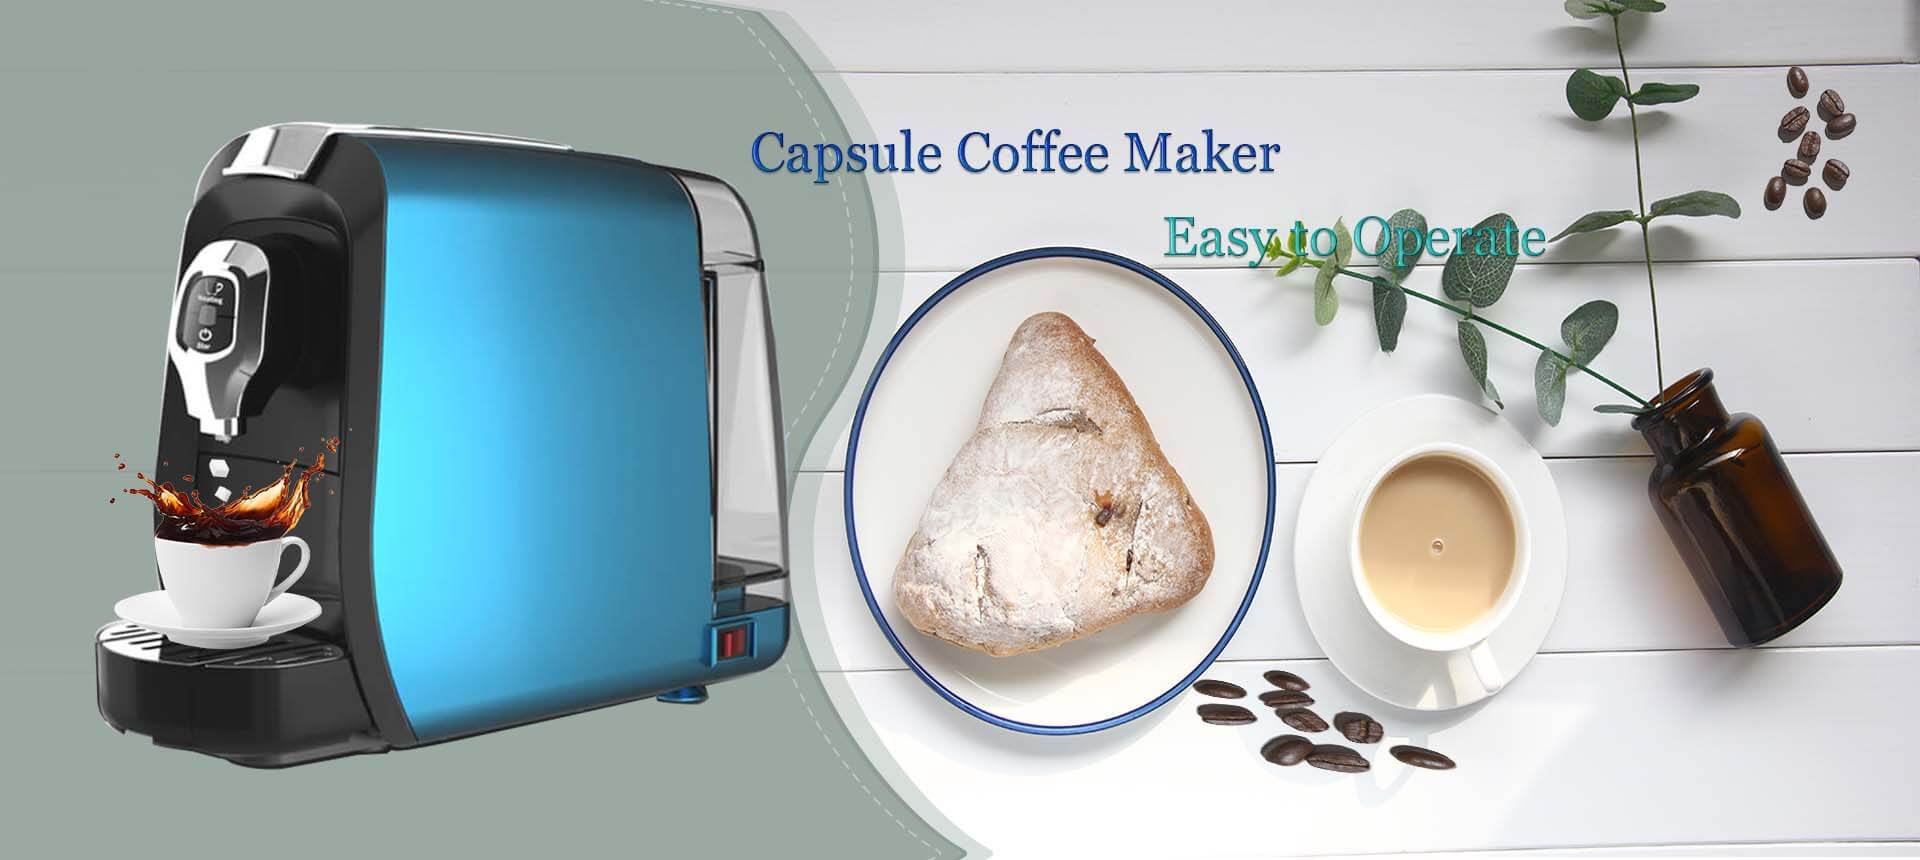 Capsule coffee maker